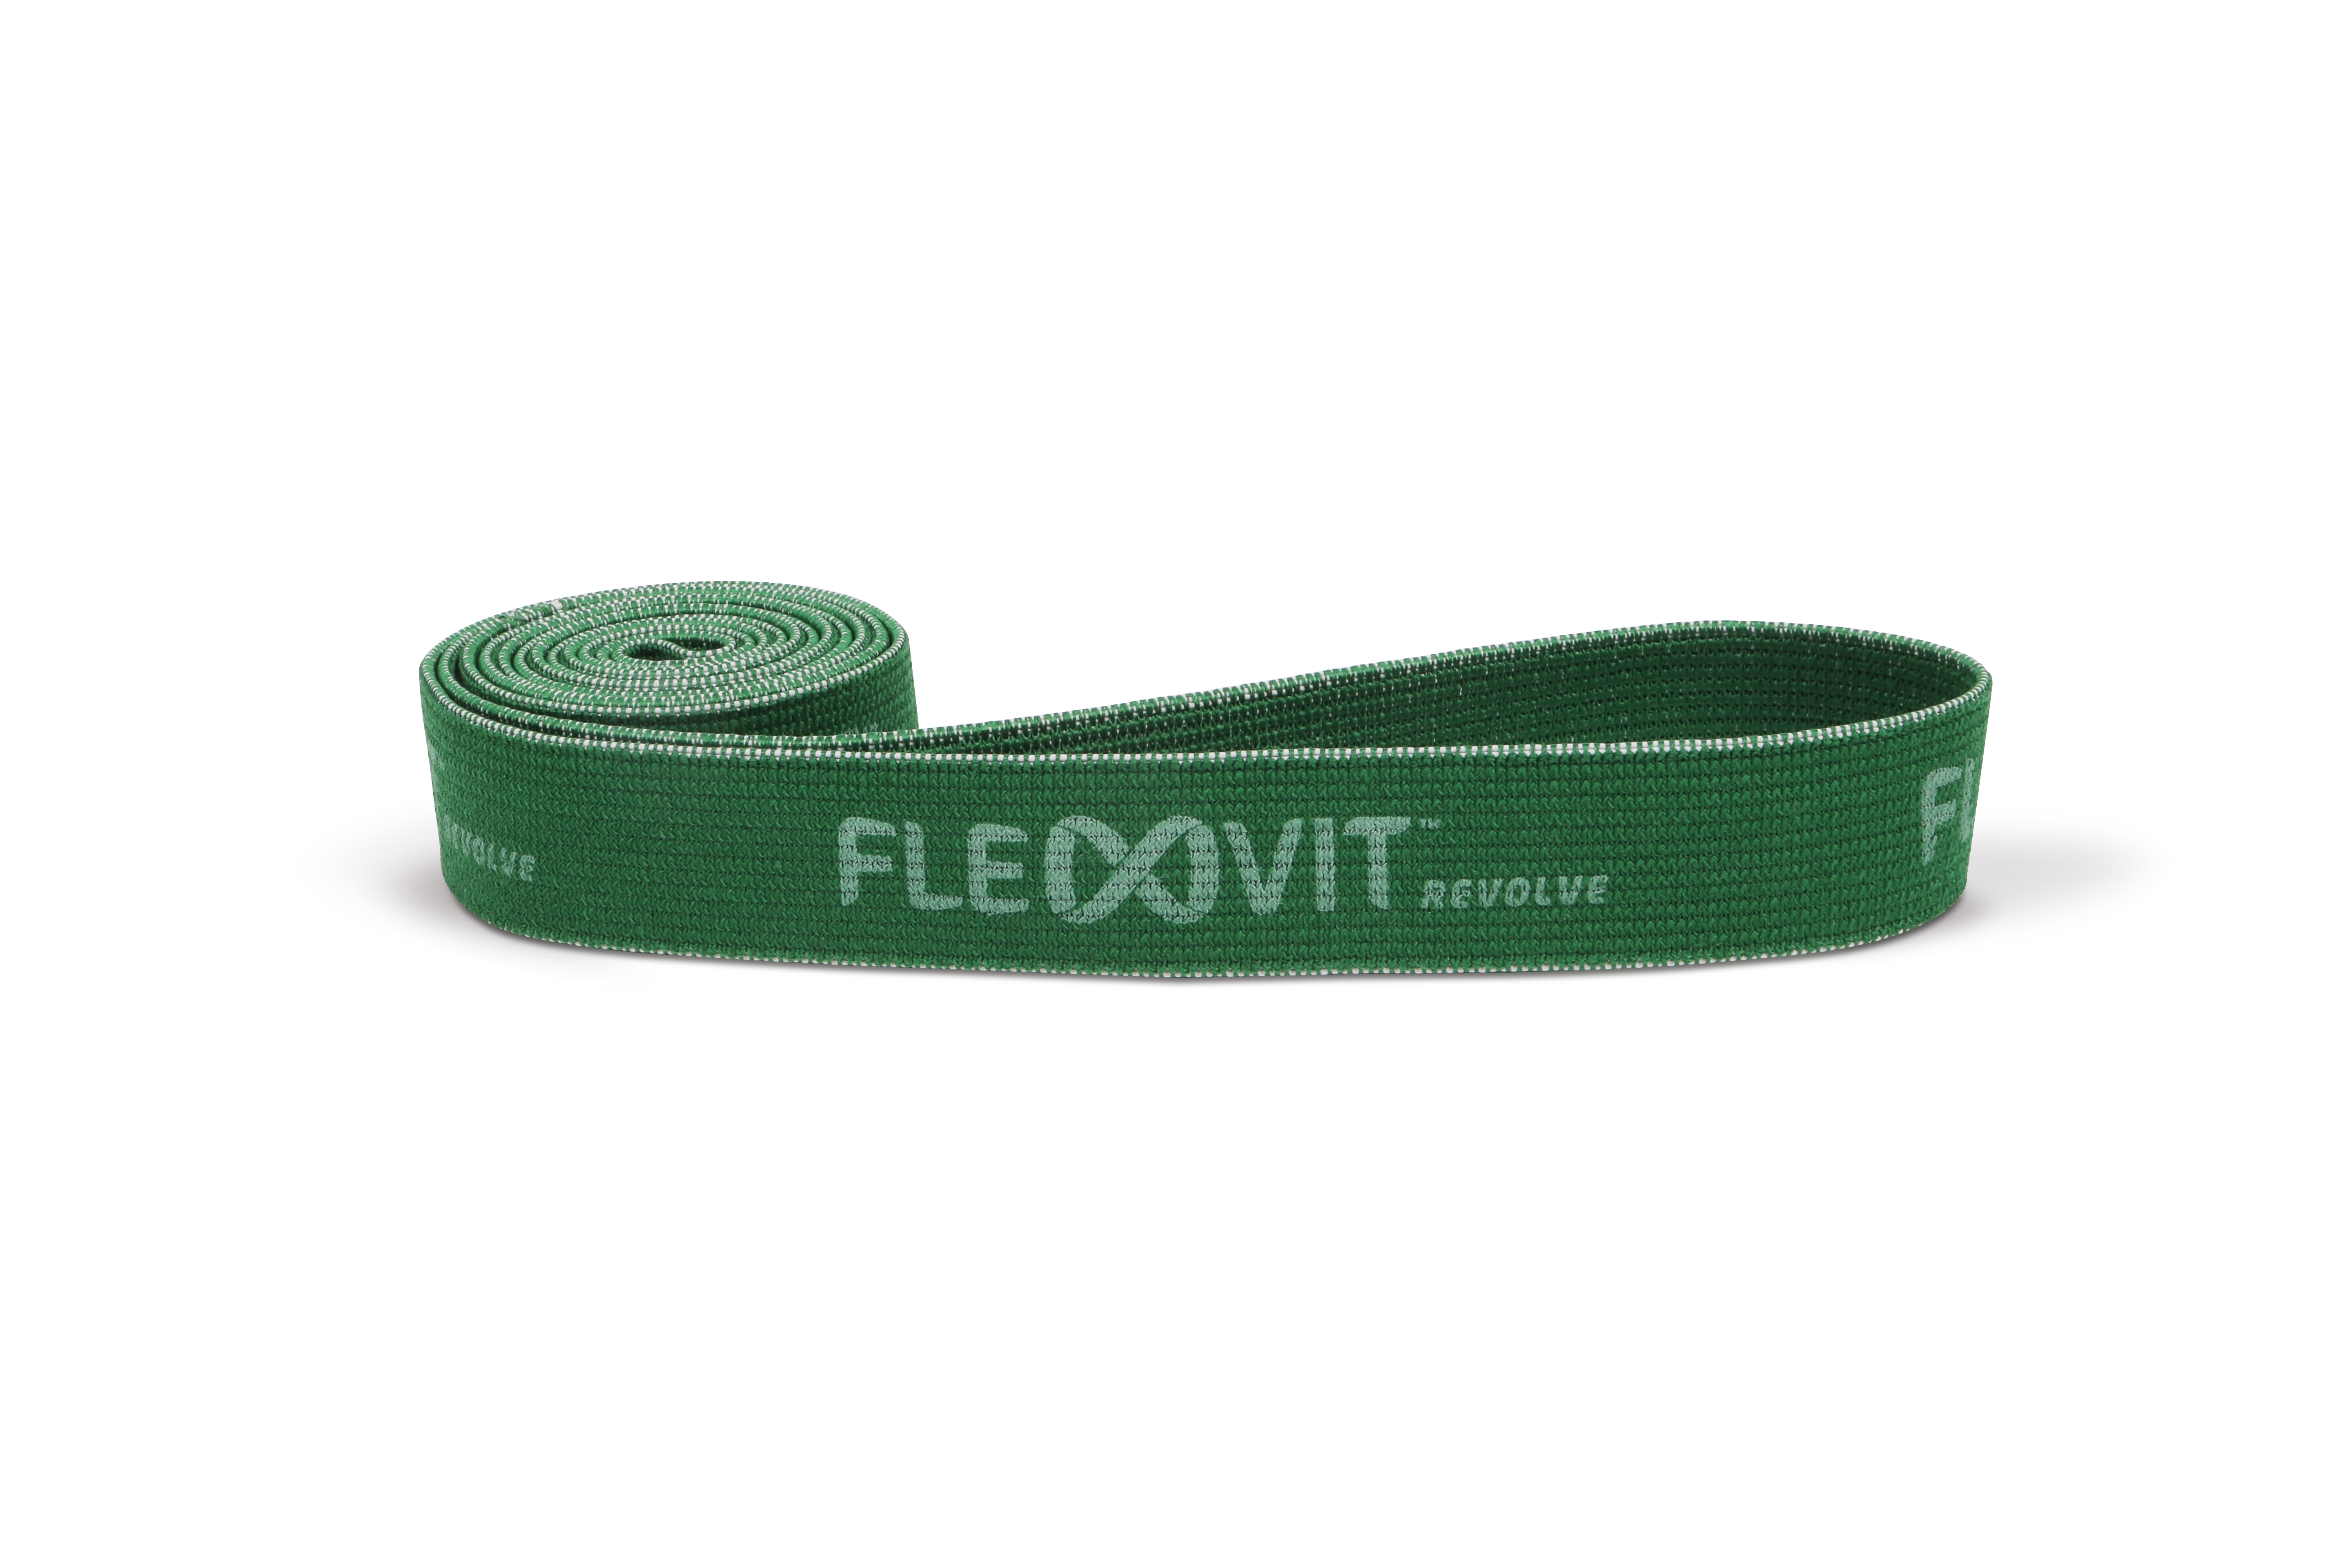 FLEXVIT Revolve belt - solid green